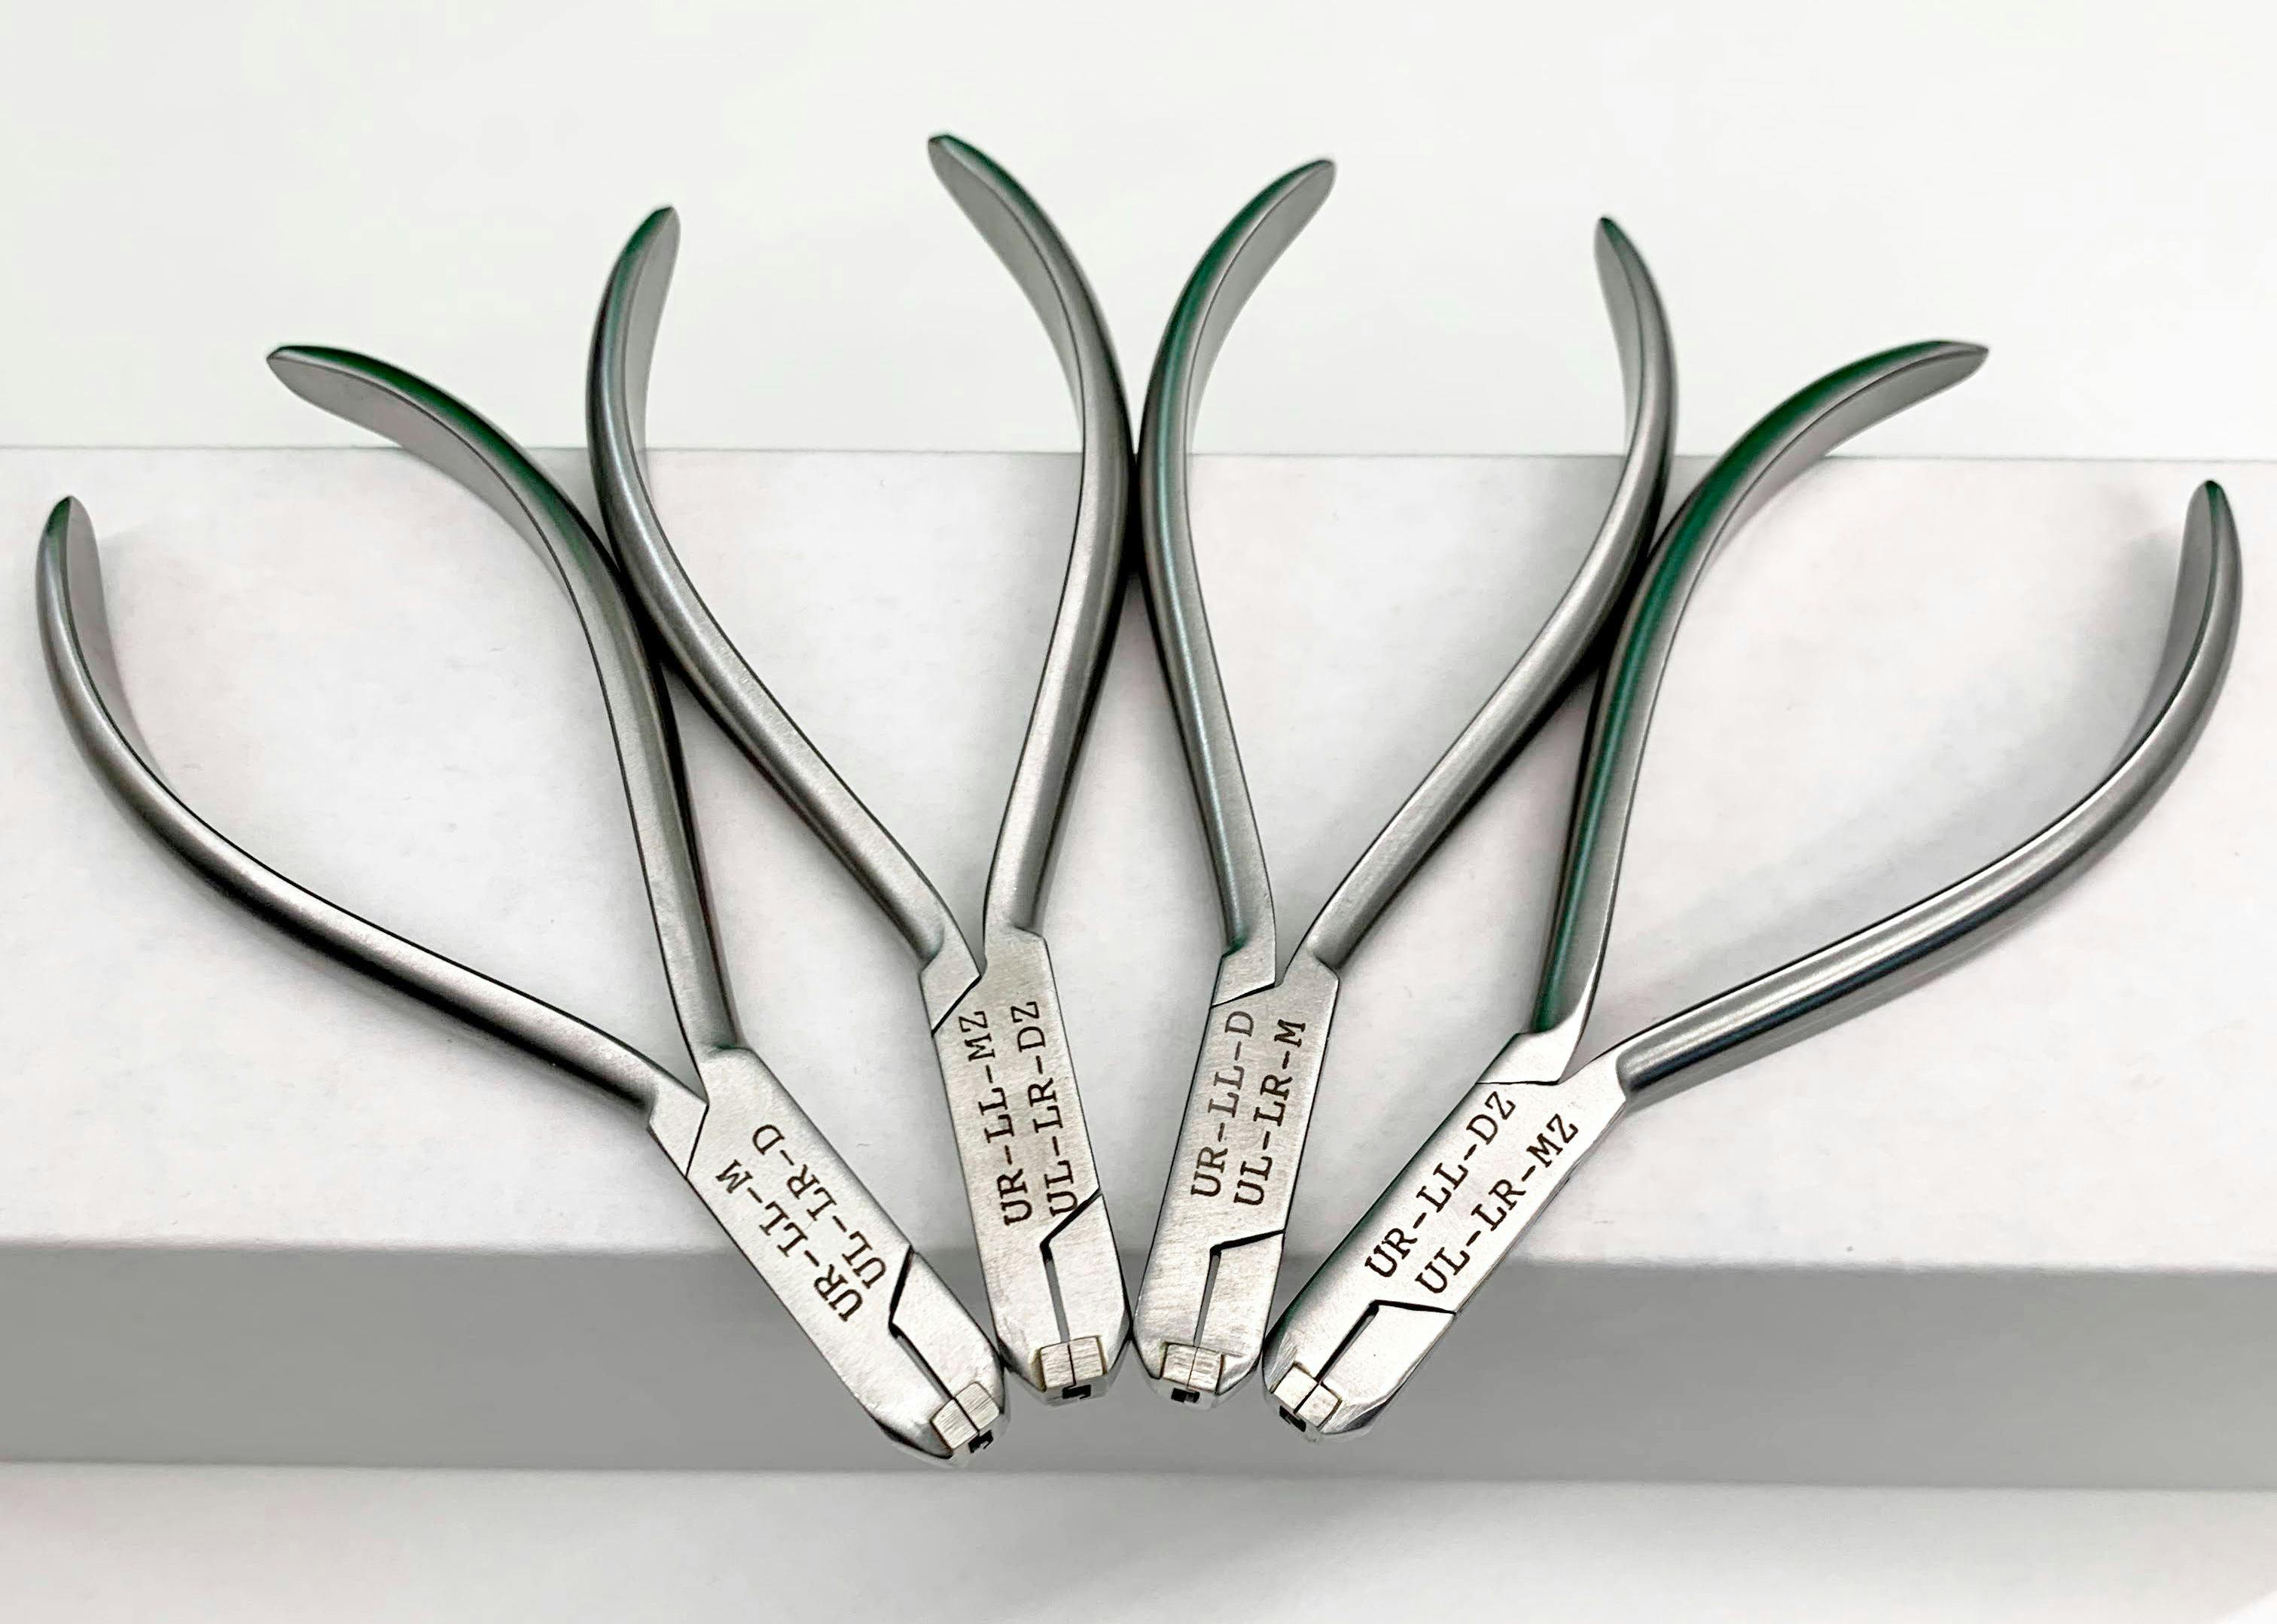 Progressive Dental Supply Introduces Second Order Bend Instruments